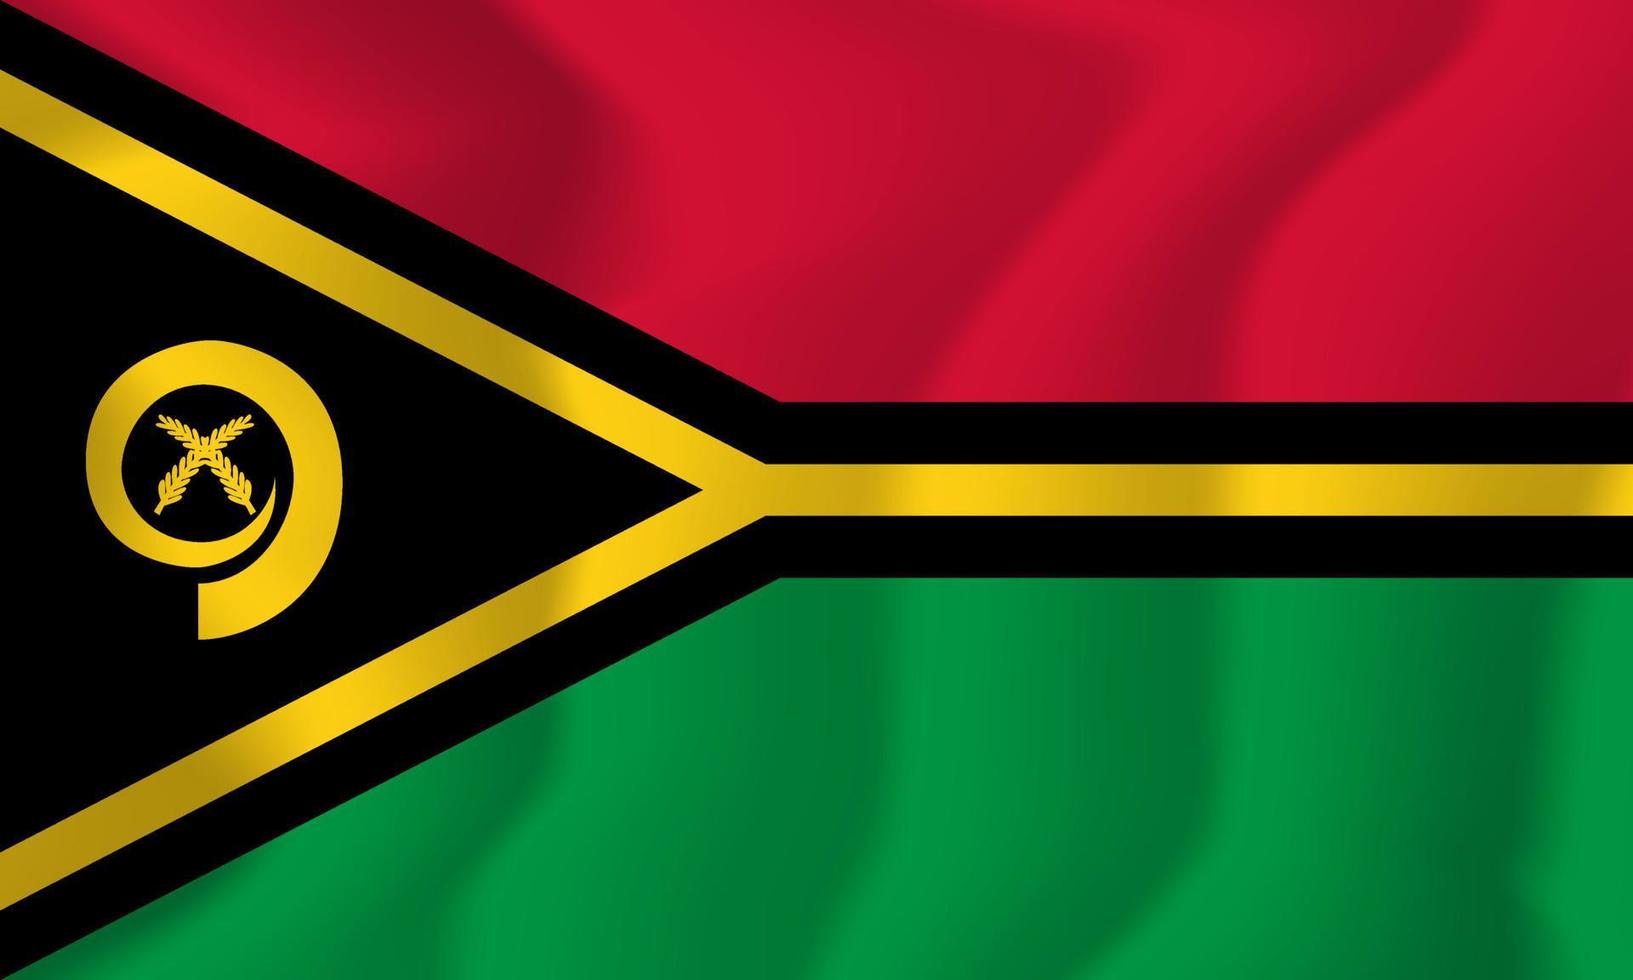 Vanuatu National Waving Flag Background Illustration vector